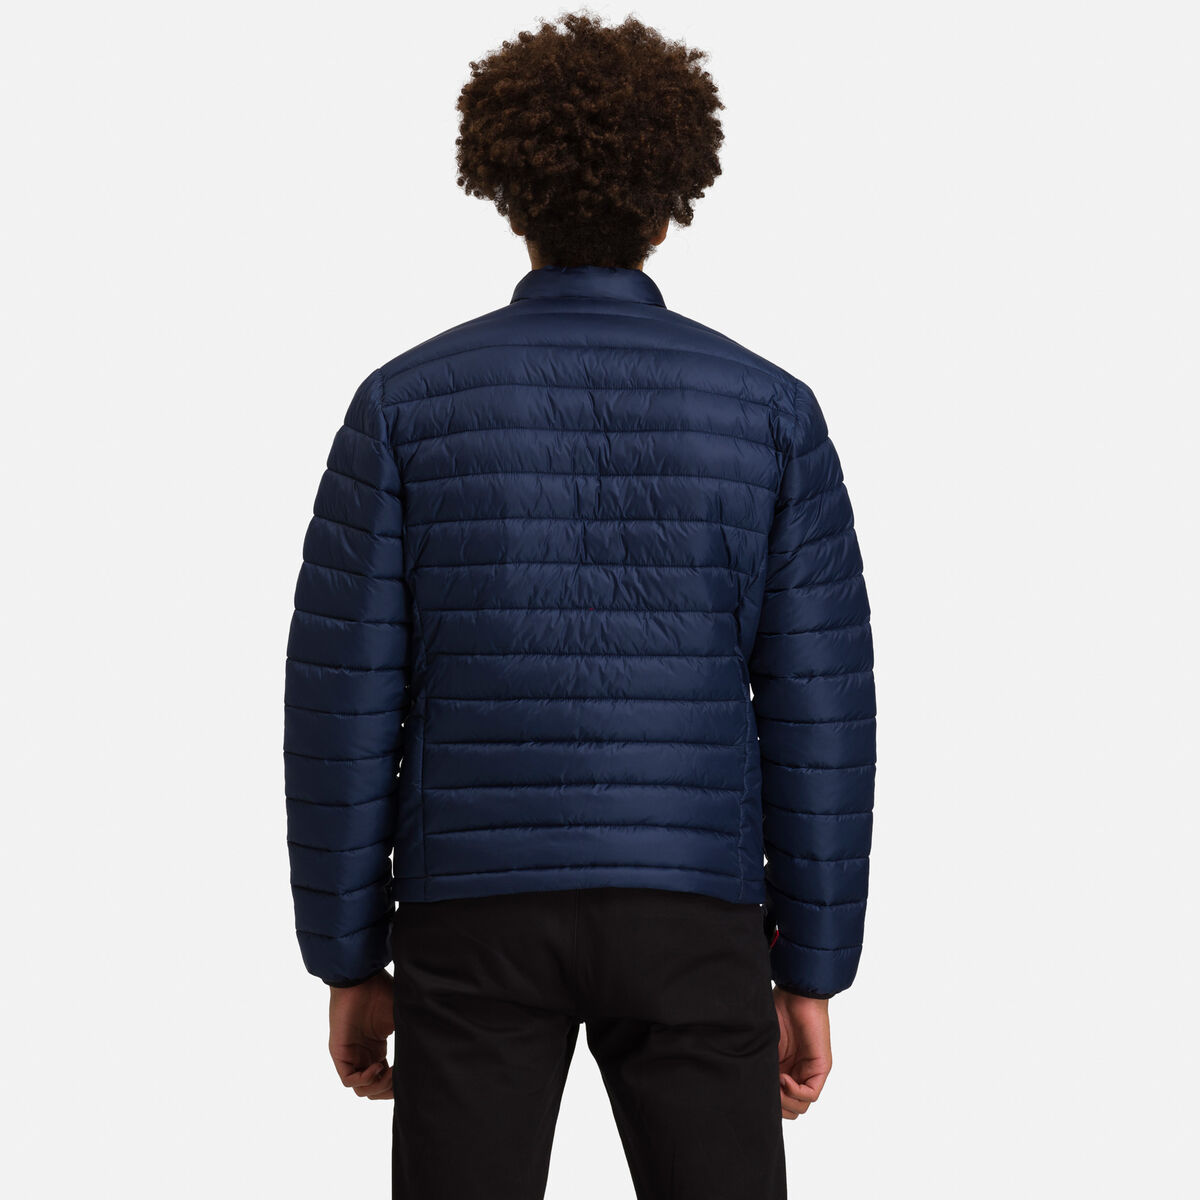 Rossignol Men's insulated jacket 100gr blue